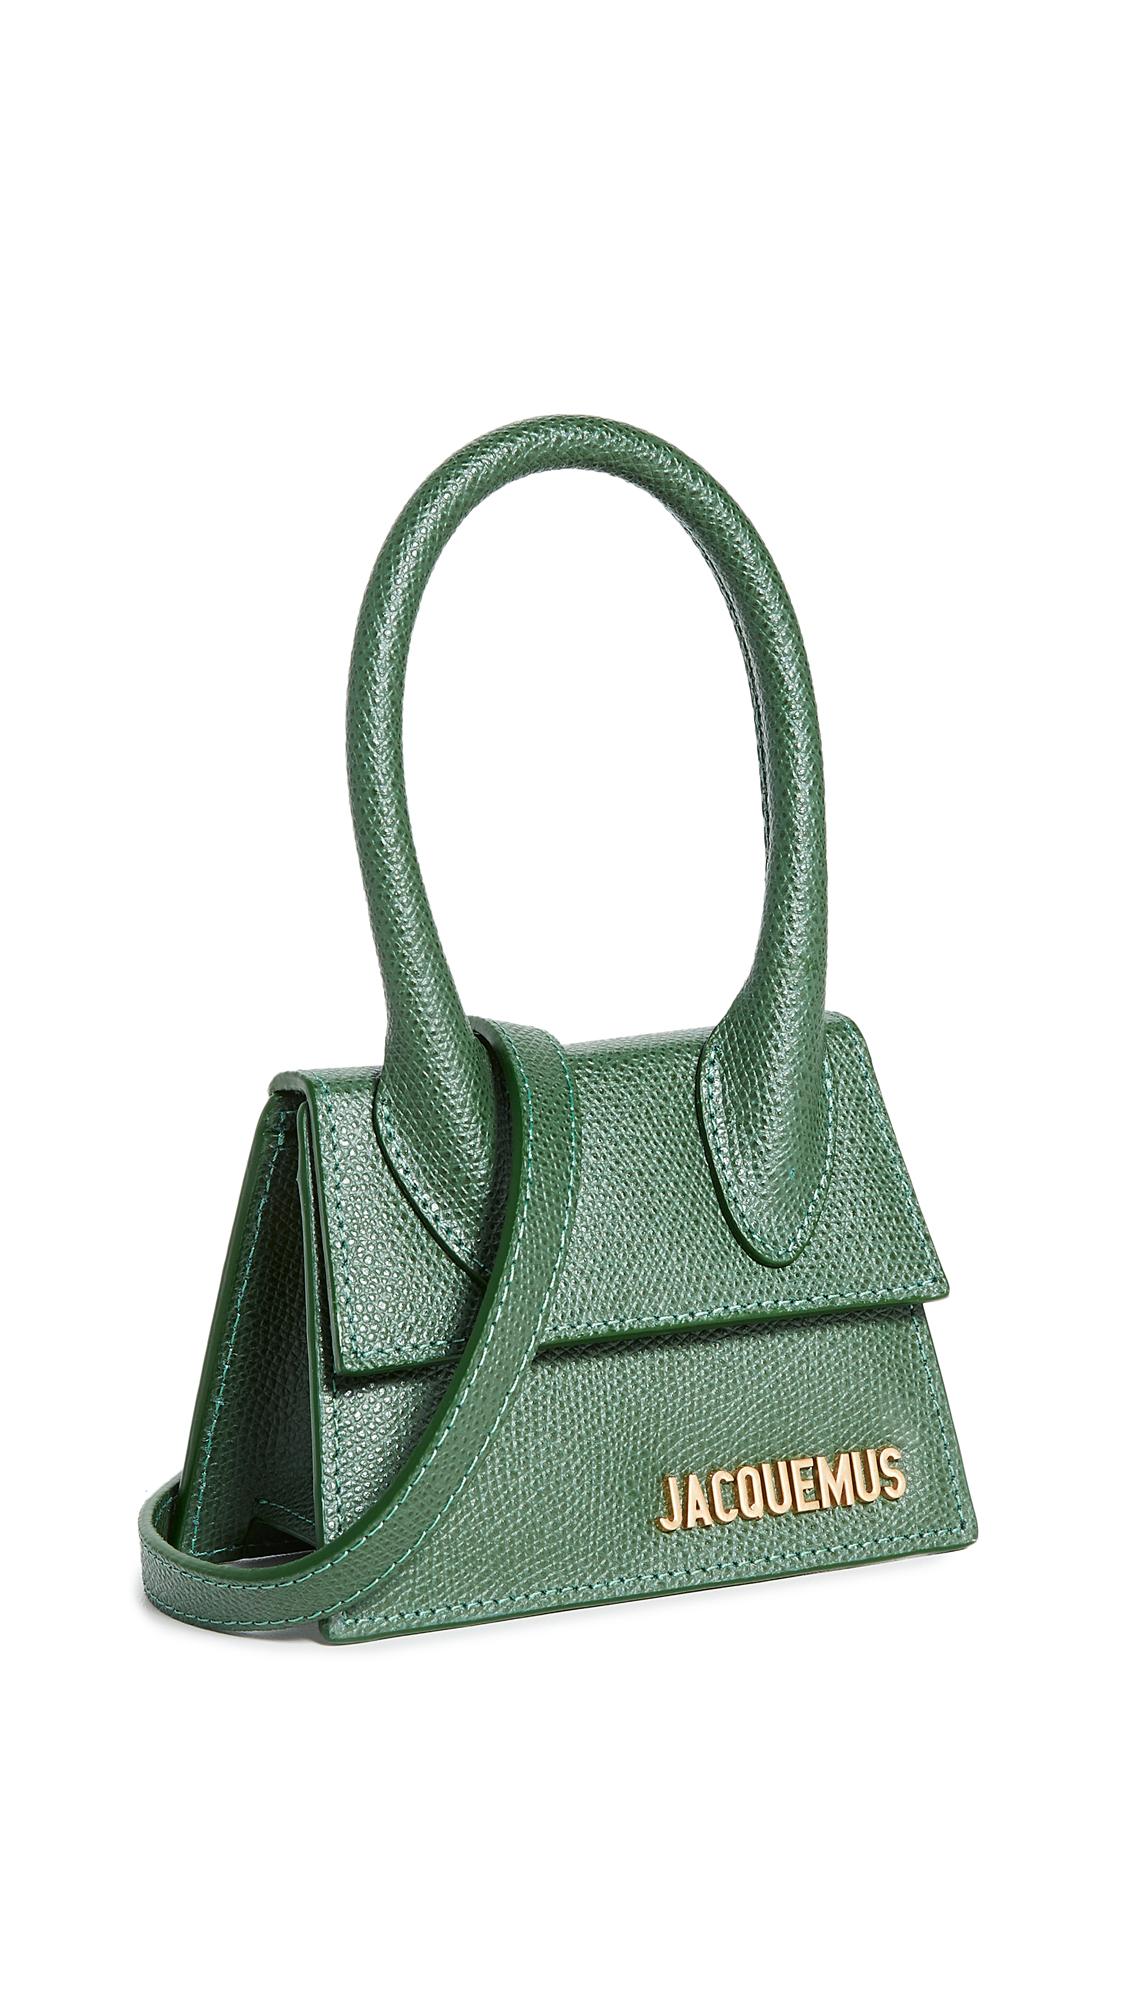 Black 'Le Chiquito Long' shoulder bag Jacquemus - Vitkac HK